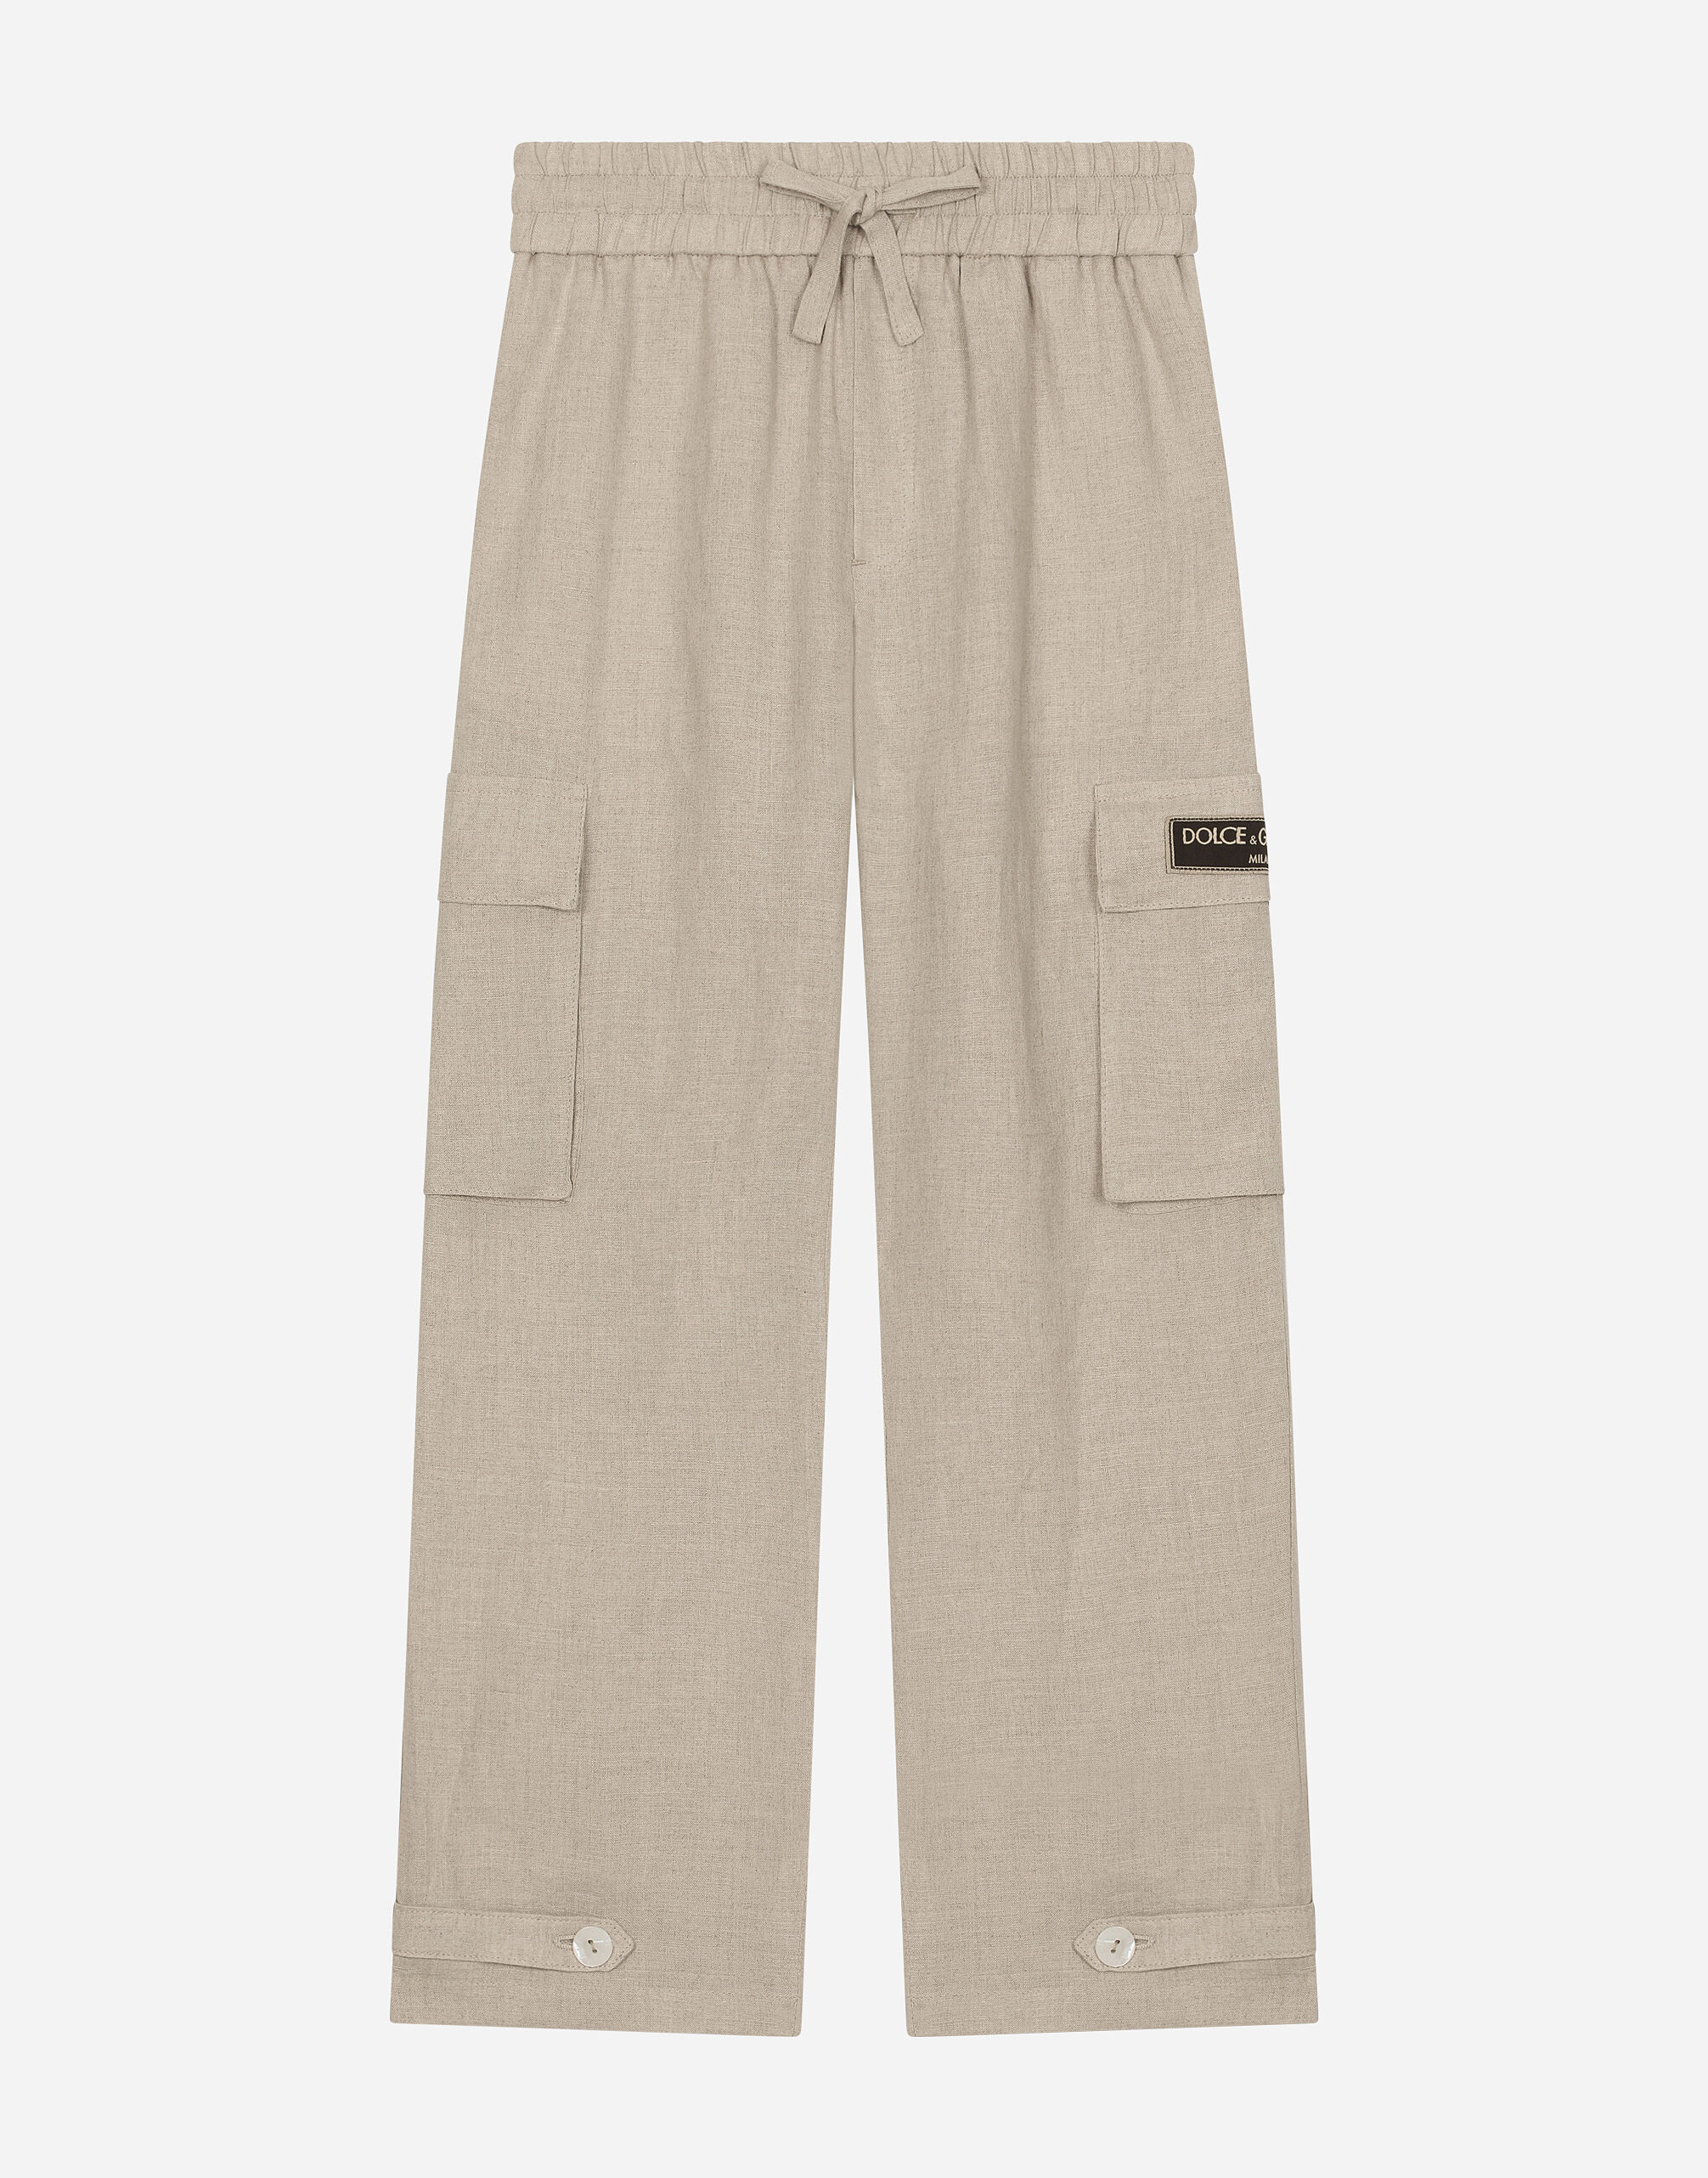 Dolce & Gabbana Linen cargo pants with branded label Print L44S10FI5JO